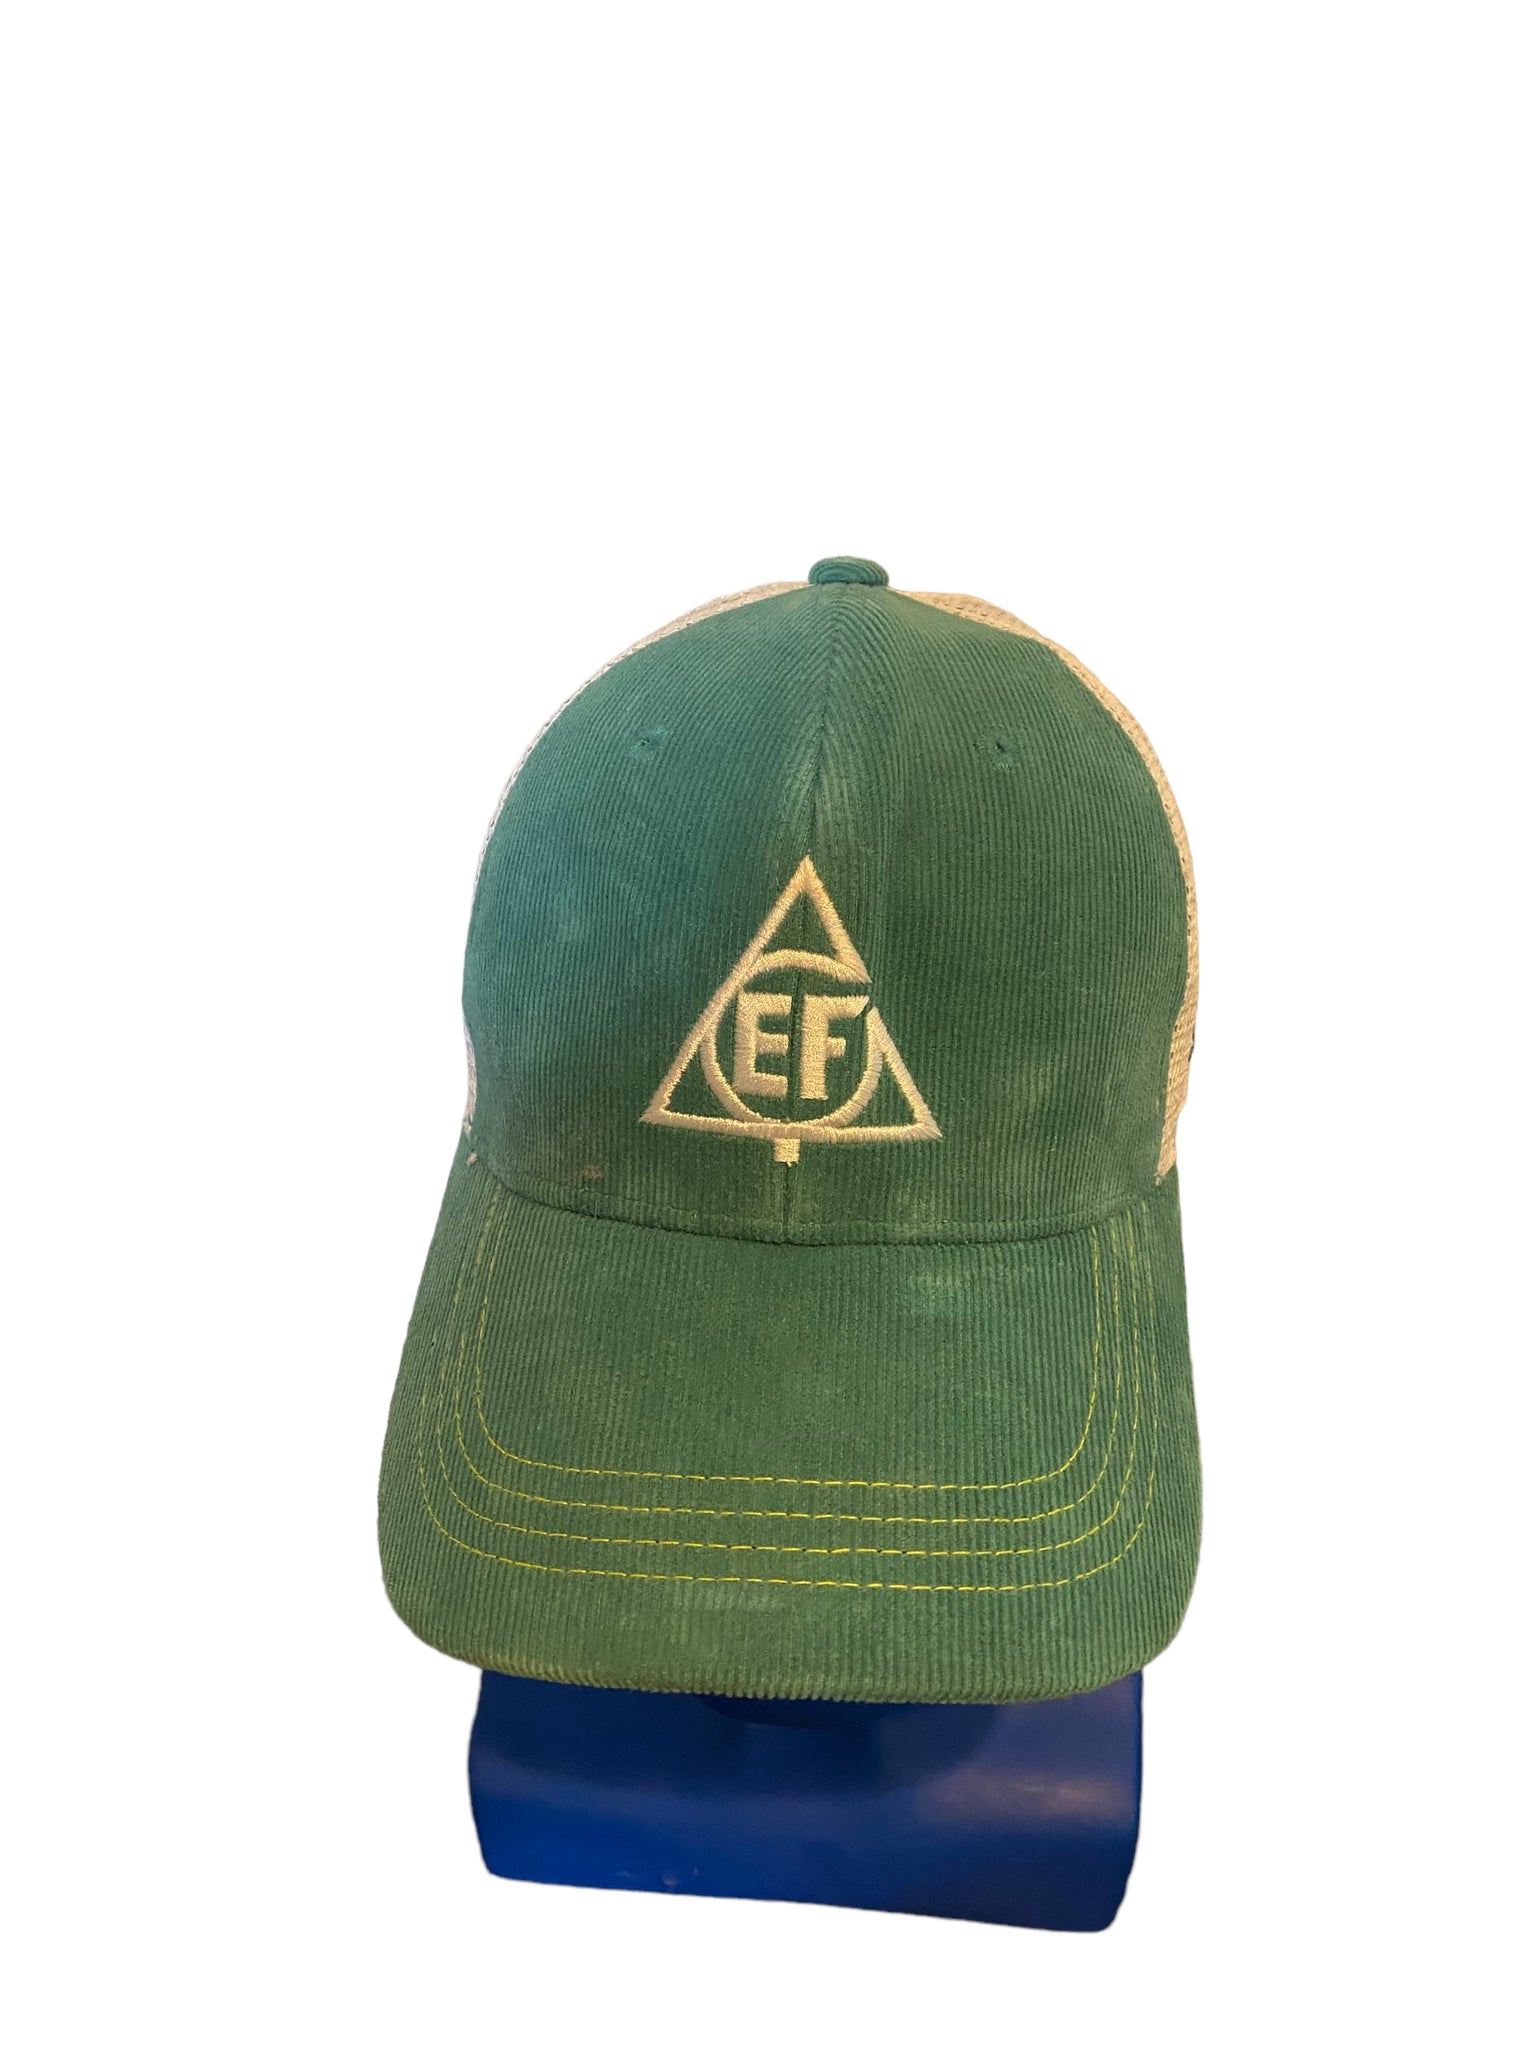 Electric Forest Hat Staff Hat Trucker Mesh SnapBack Festival Hat Merch